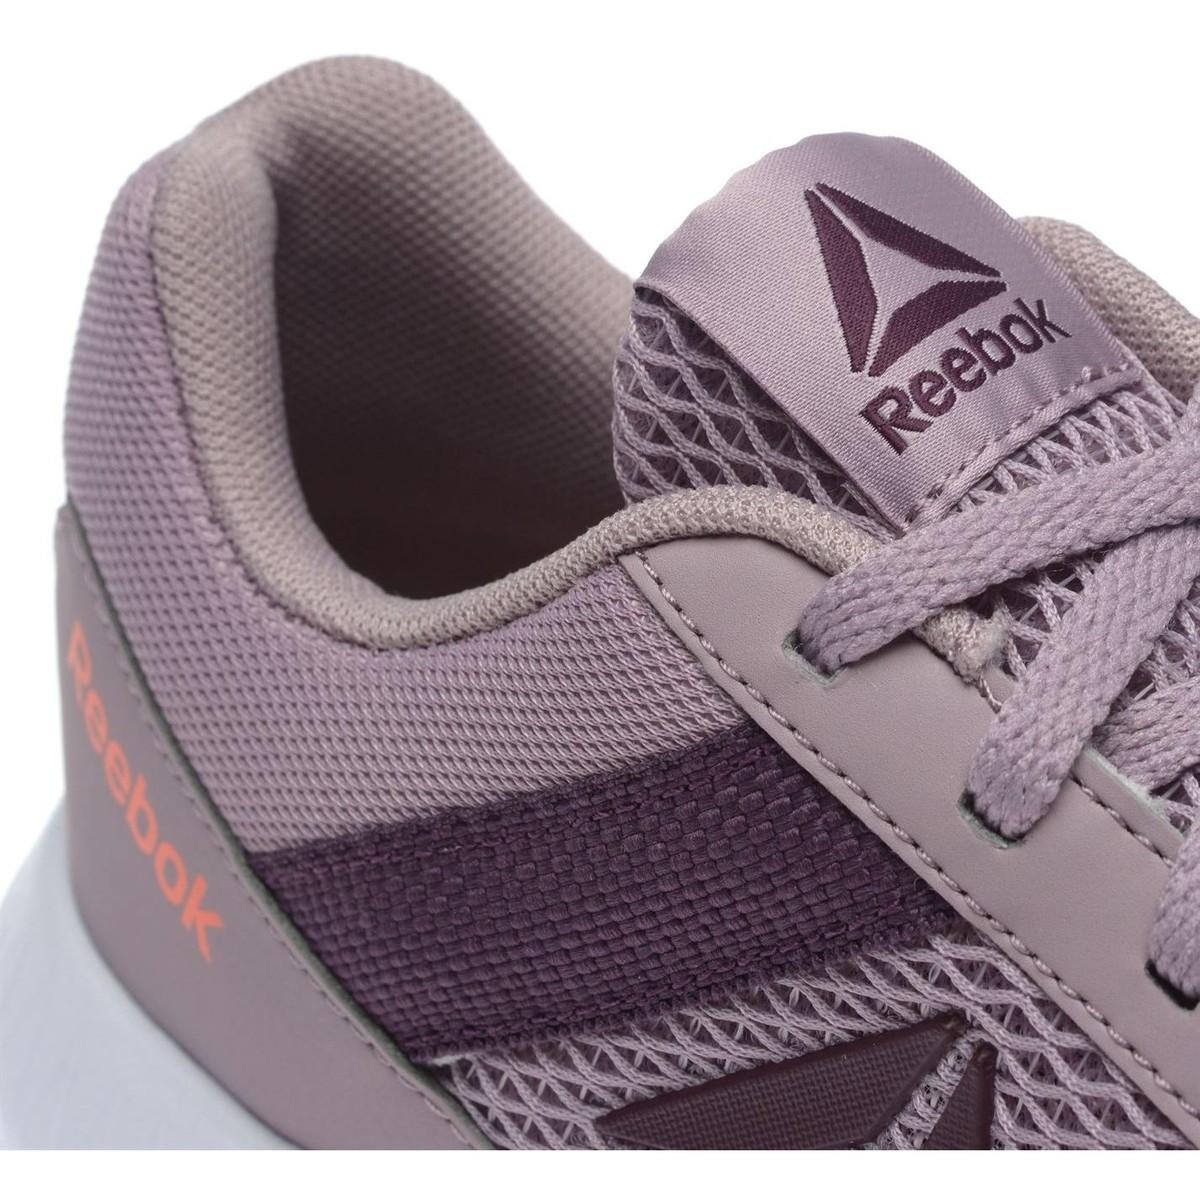 reebok purple trainers